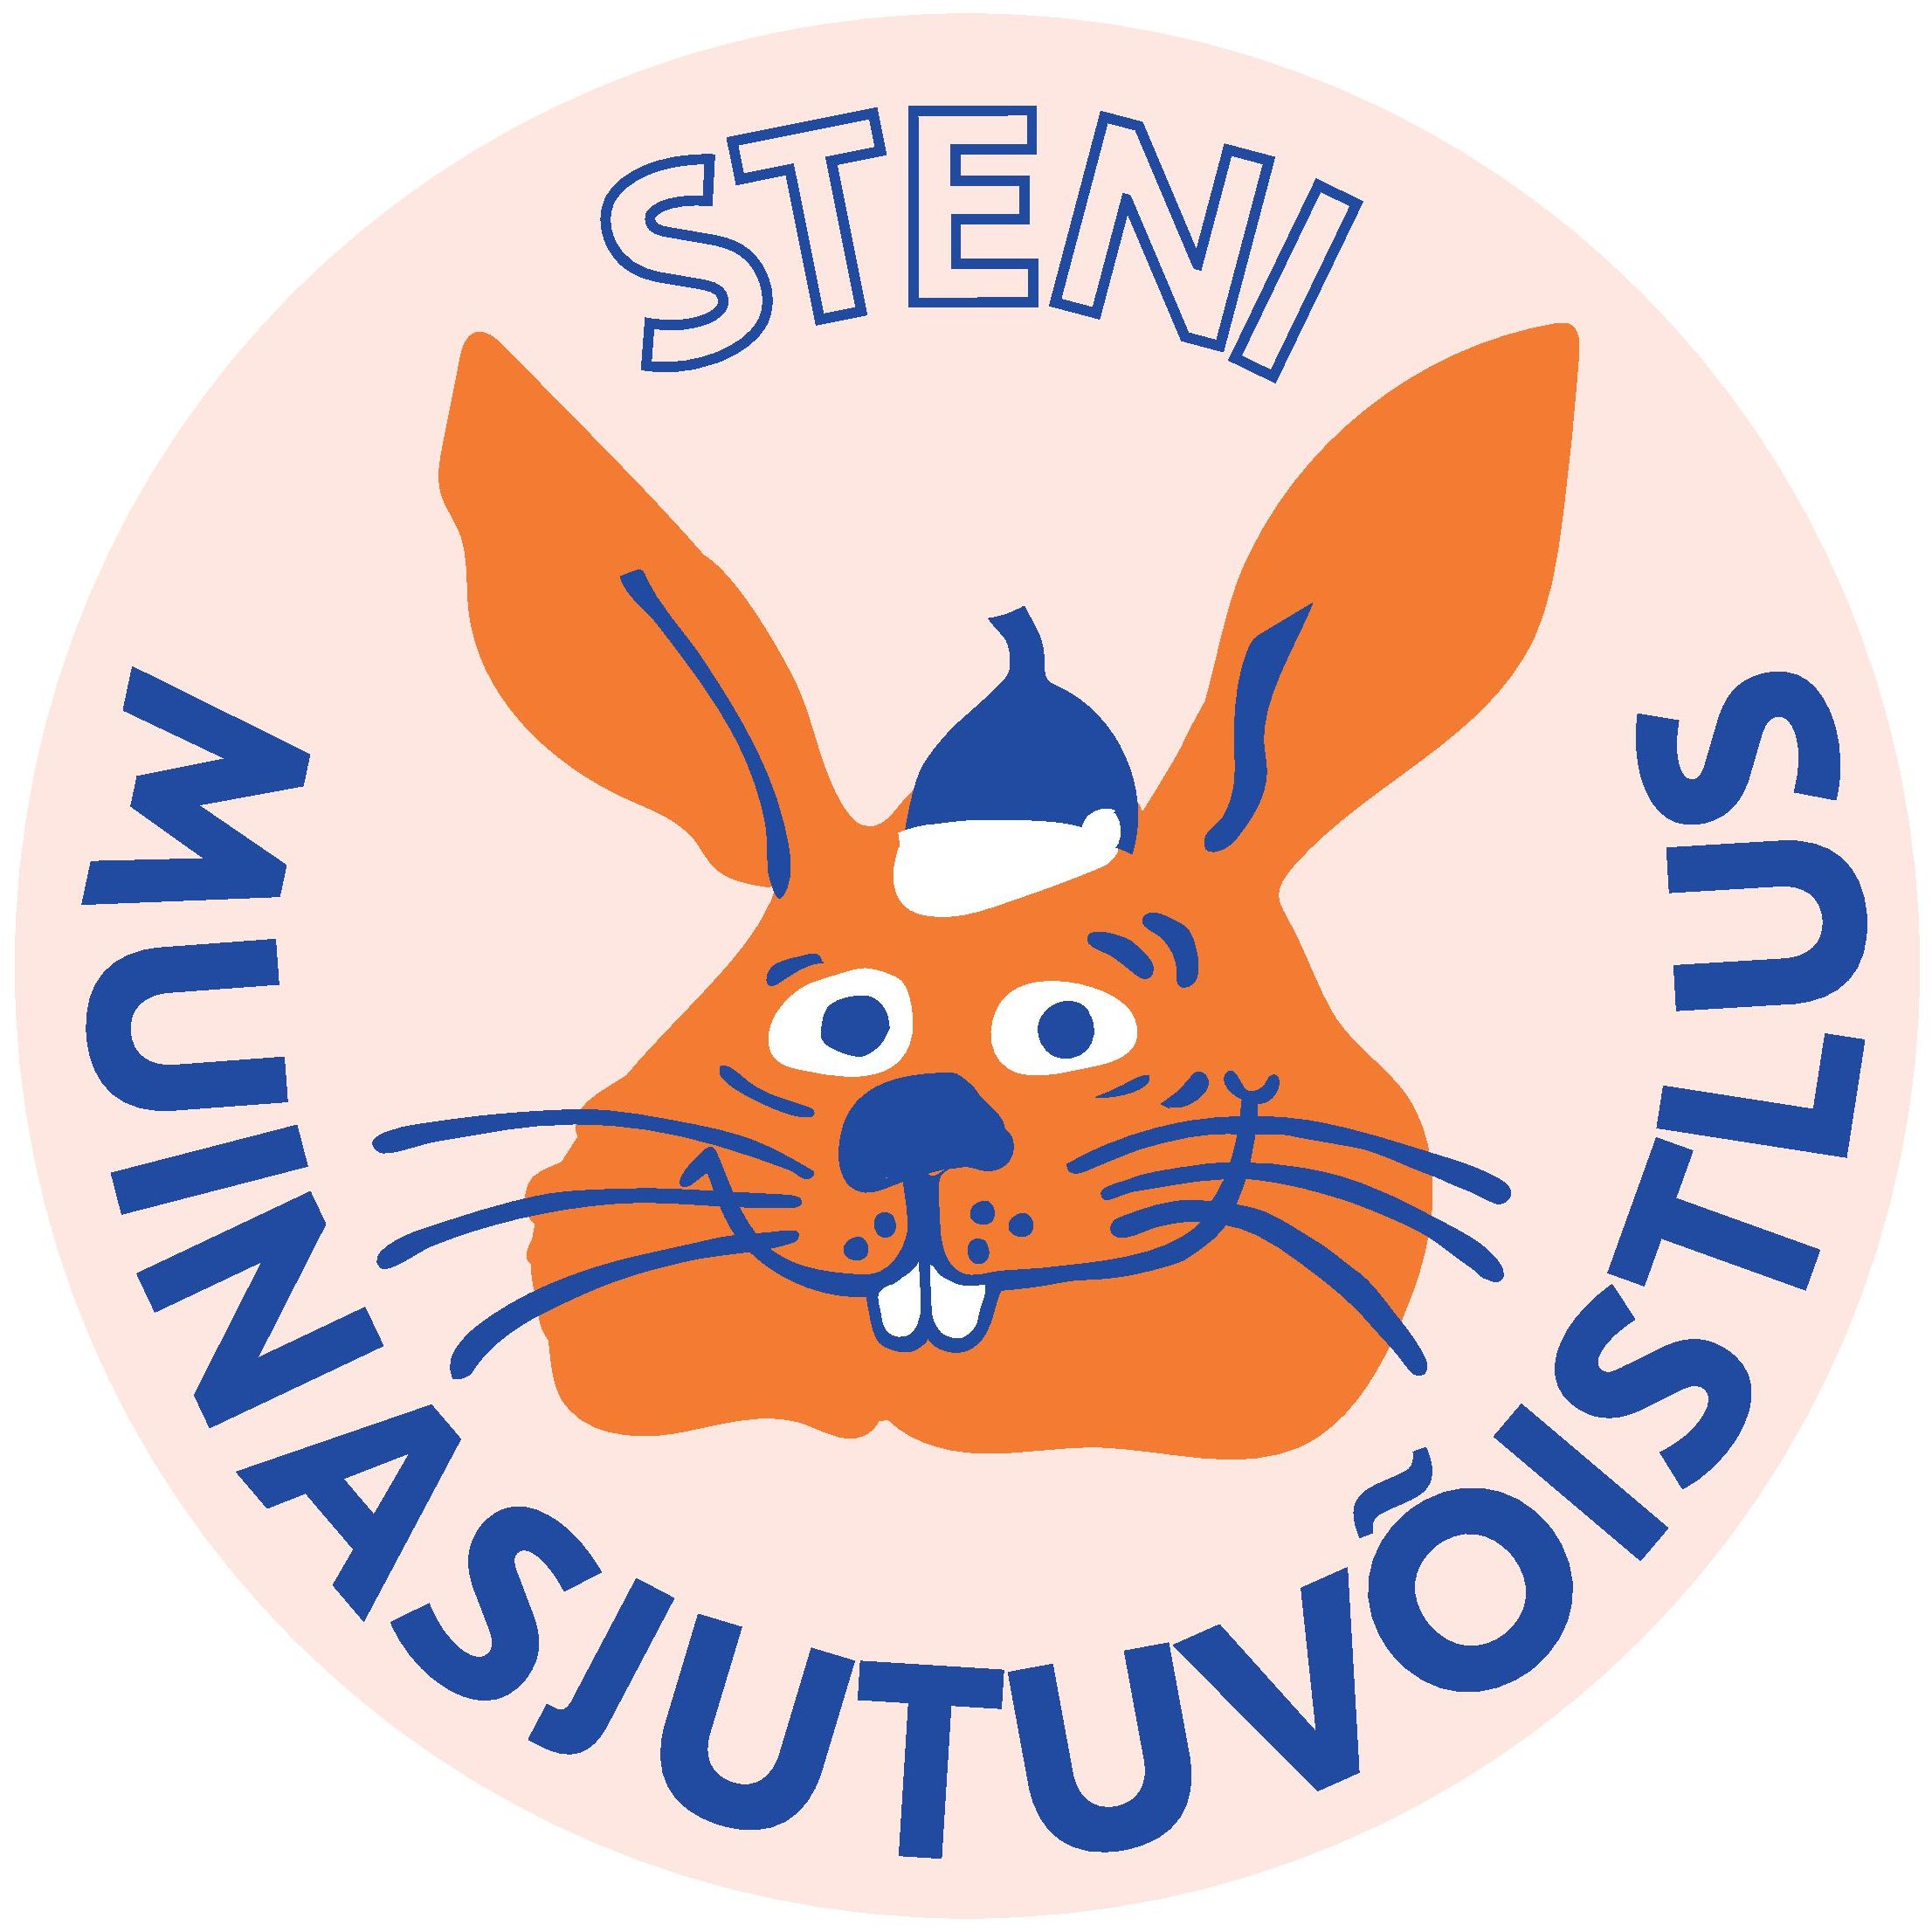 Steni-muinasjutuvostlus-logo-c